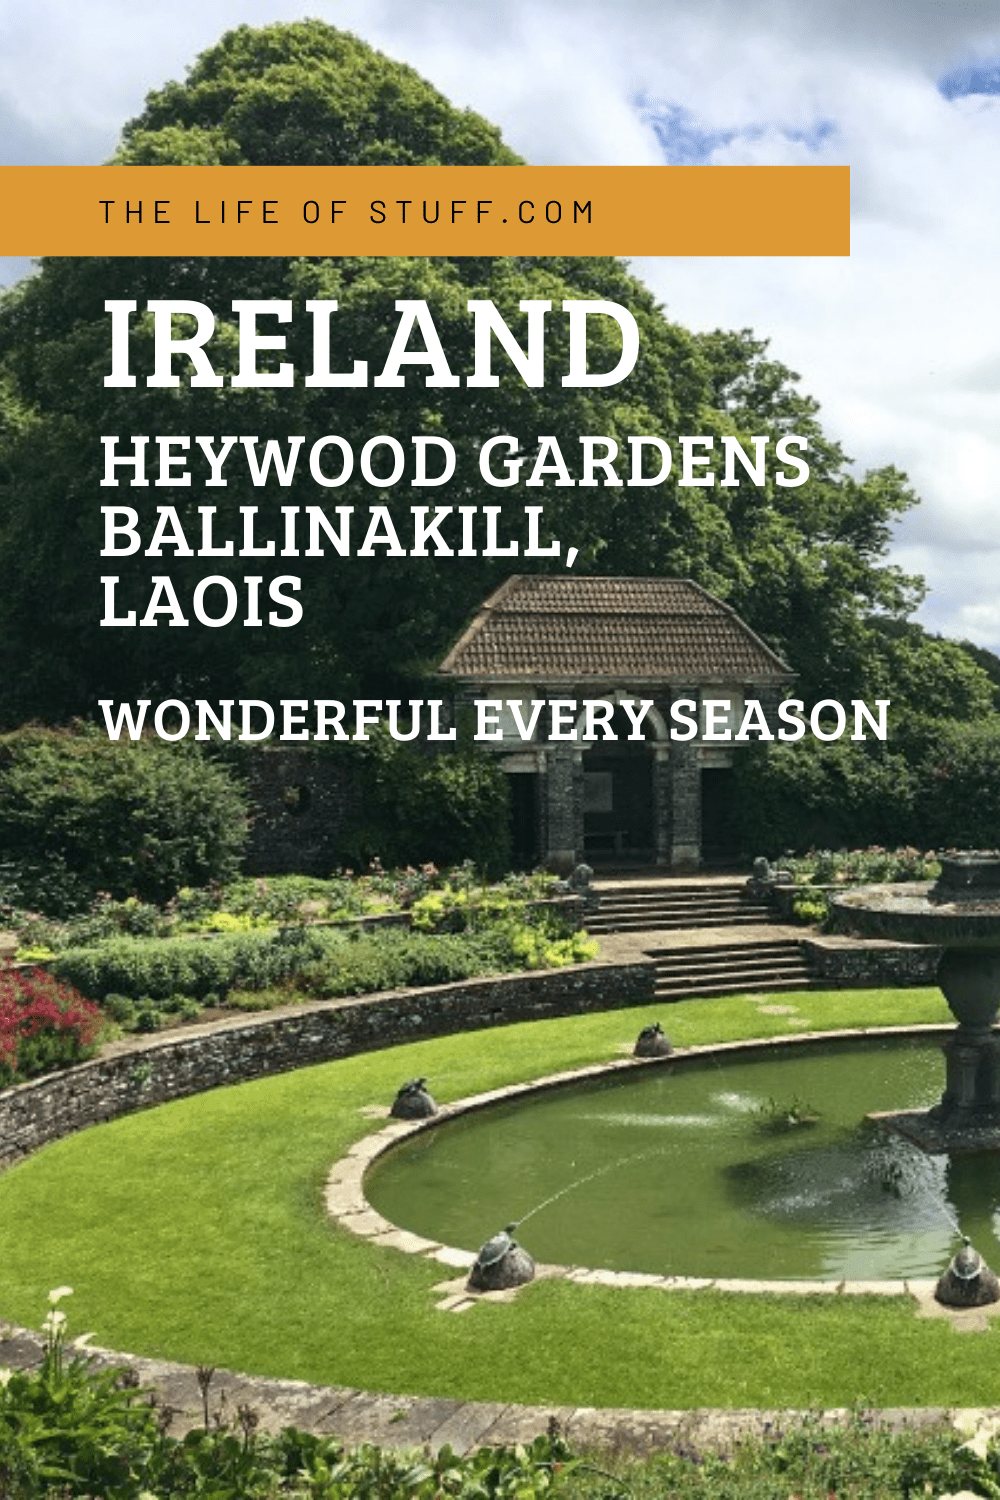 Heywood Gardens, Ballinakill, Co. Laois - Wonderful Every Season - The Life of Stuff